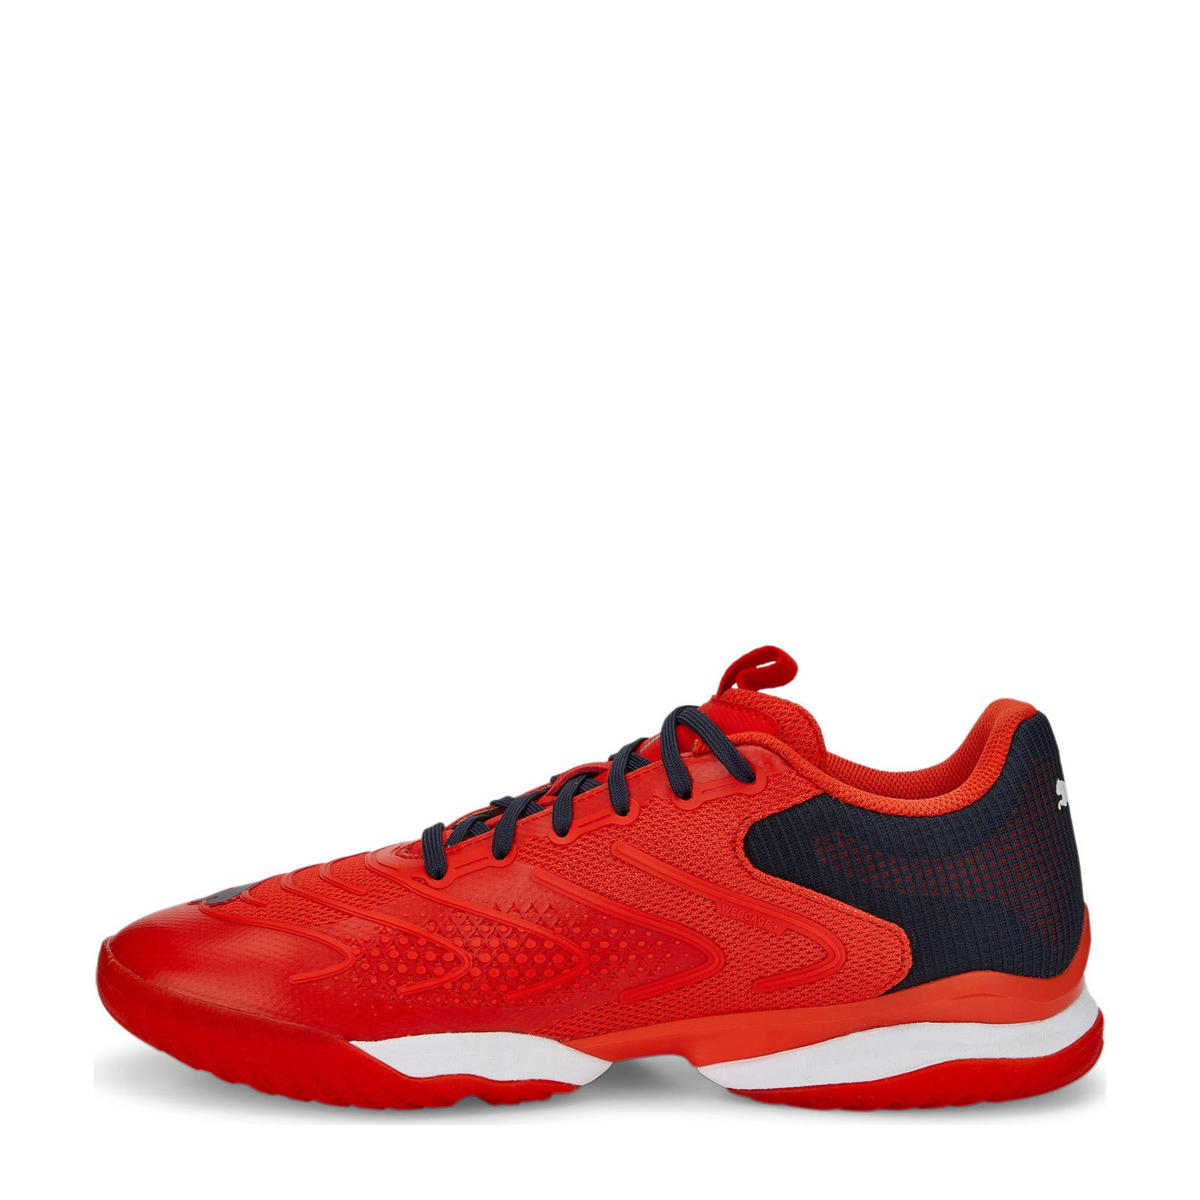 Puma RCT tennisschoenen rood/donkerblauw/wit | wehkamp